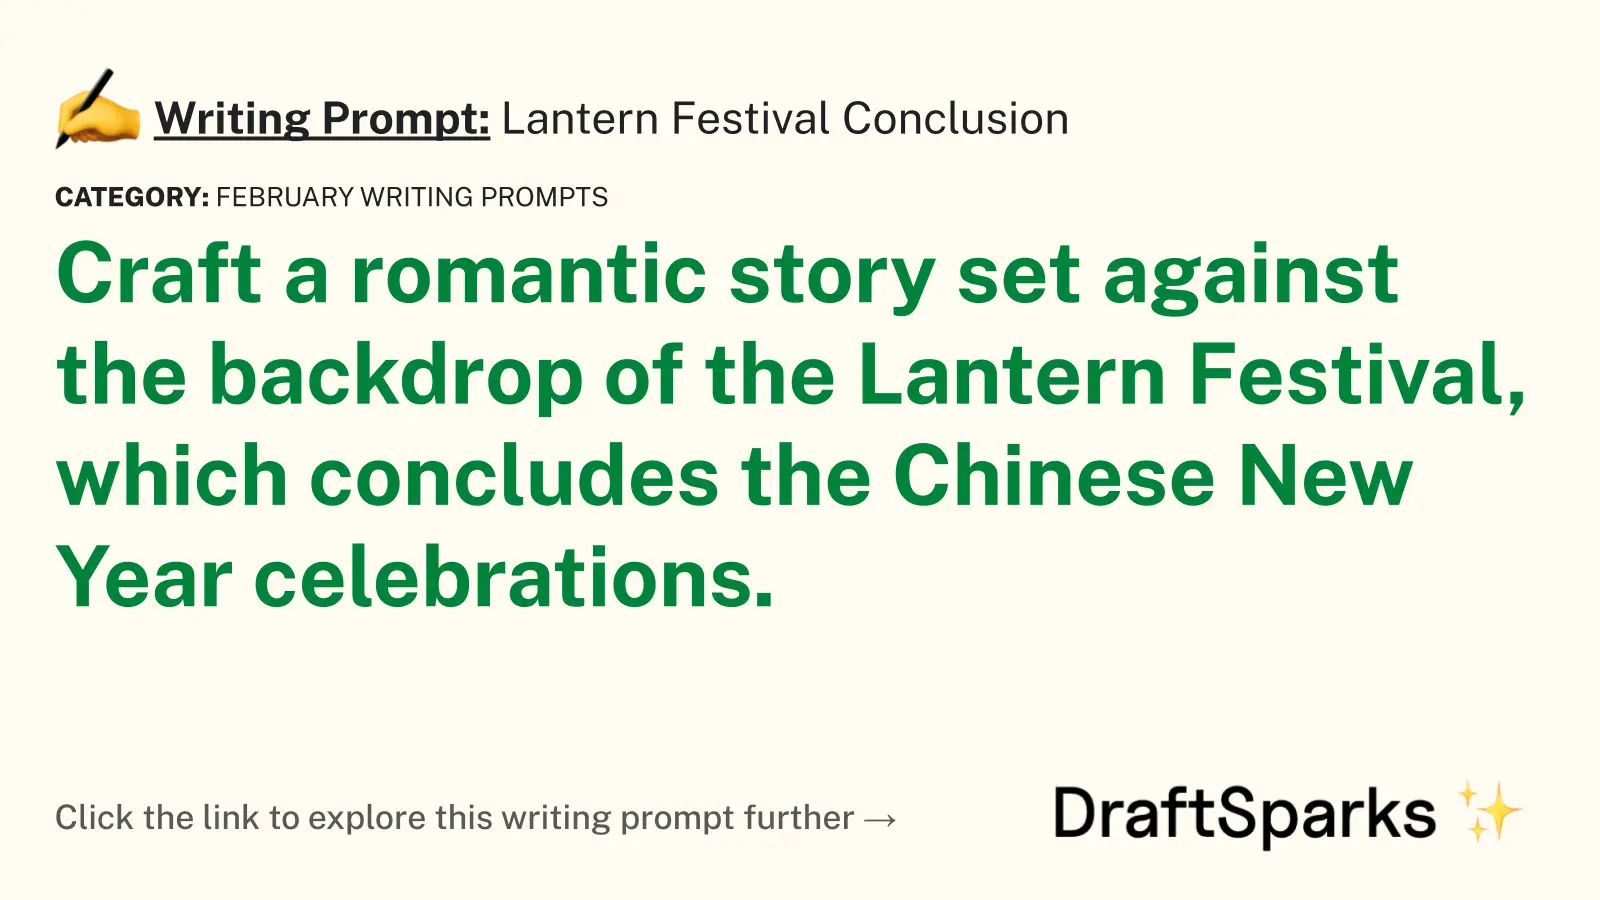 Lantern Festival Conclusion